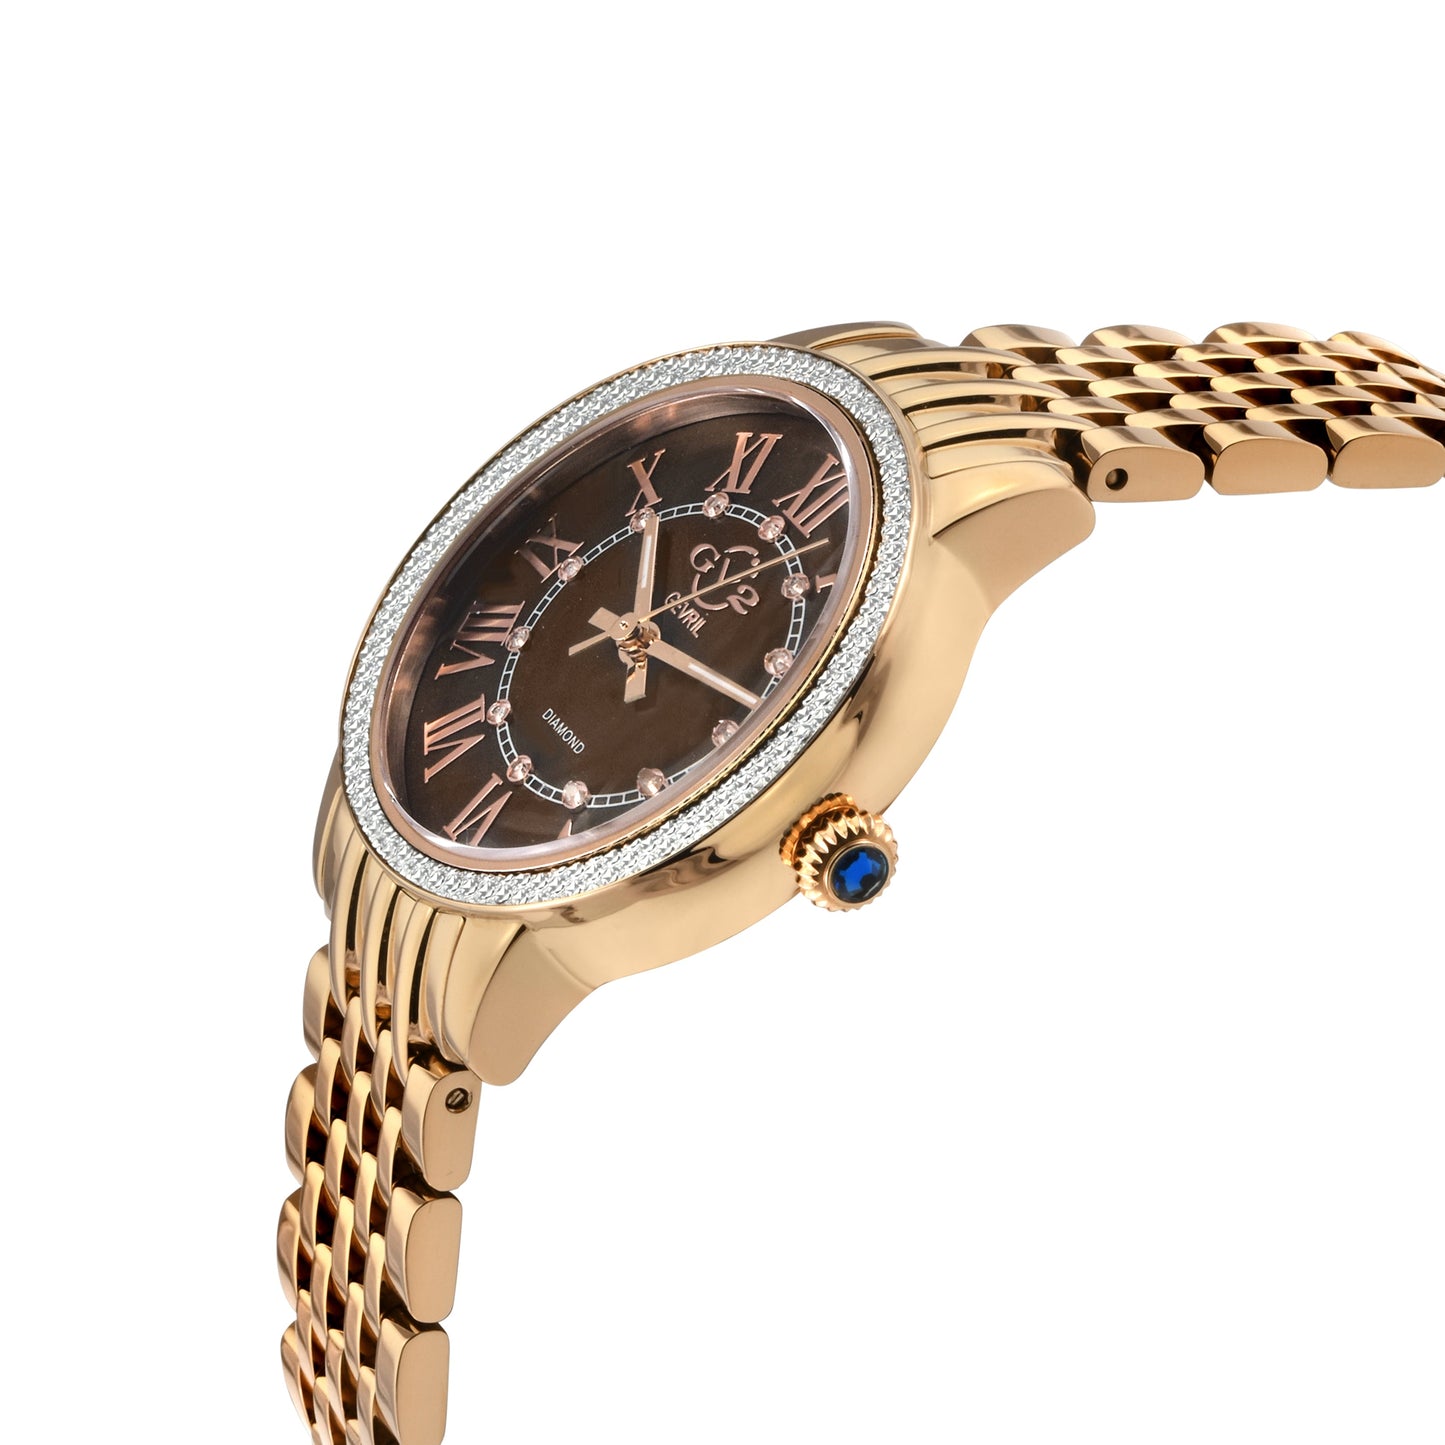 Gevril-Luxury-Swiss-Watches-GV2 Astor III Diamond-9157B